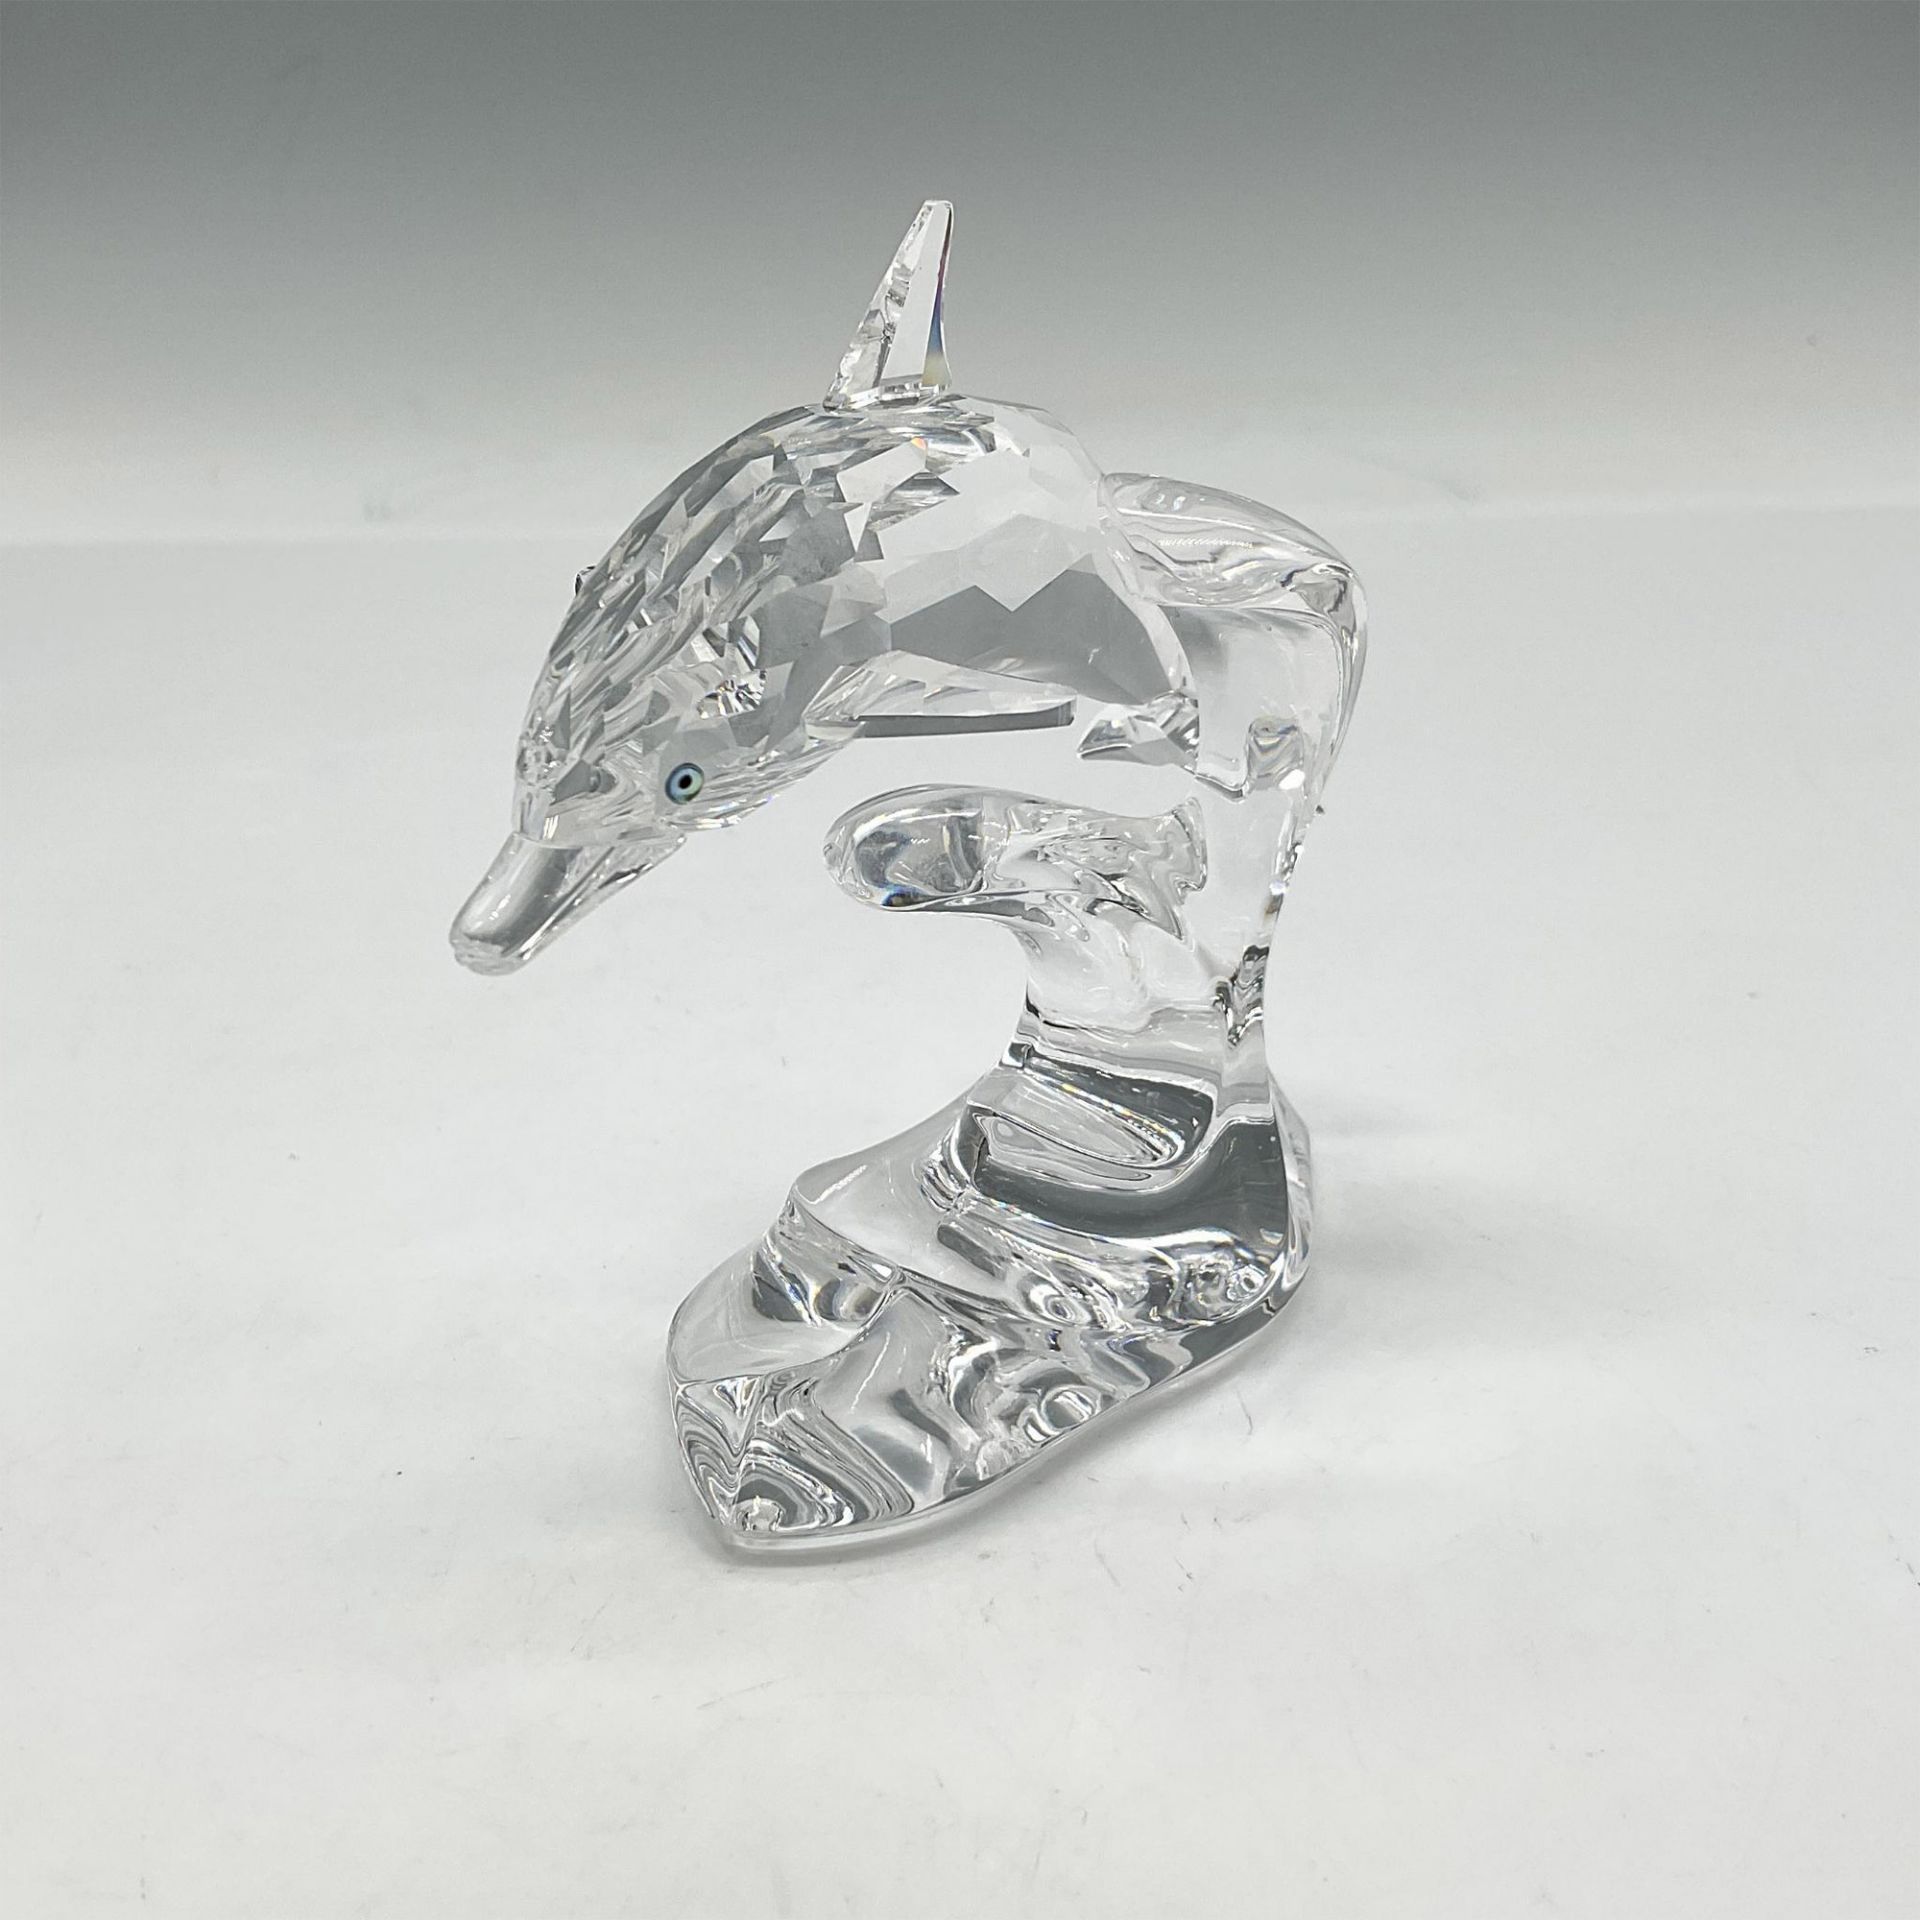 Swarovski Crystal Figurine, Dolphin on a Wave